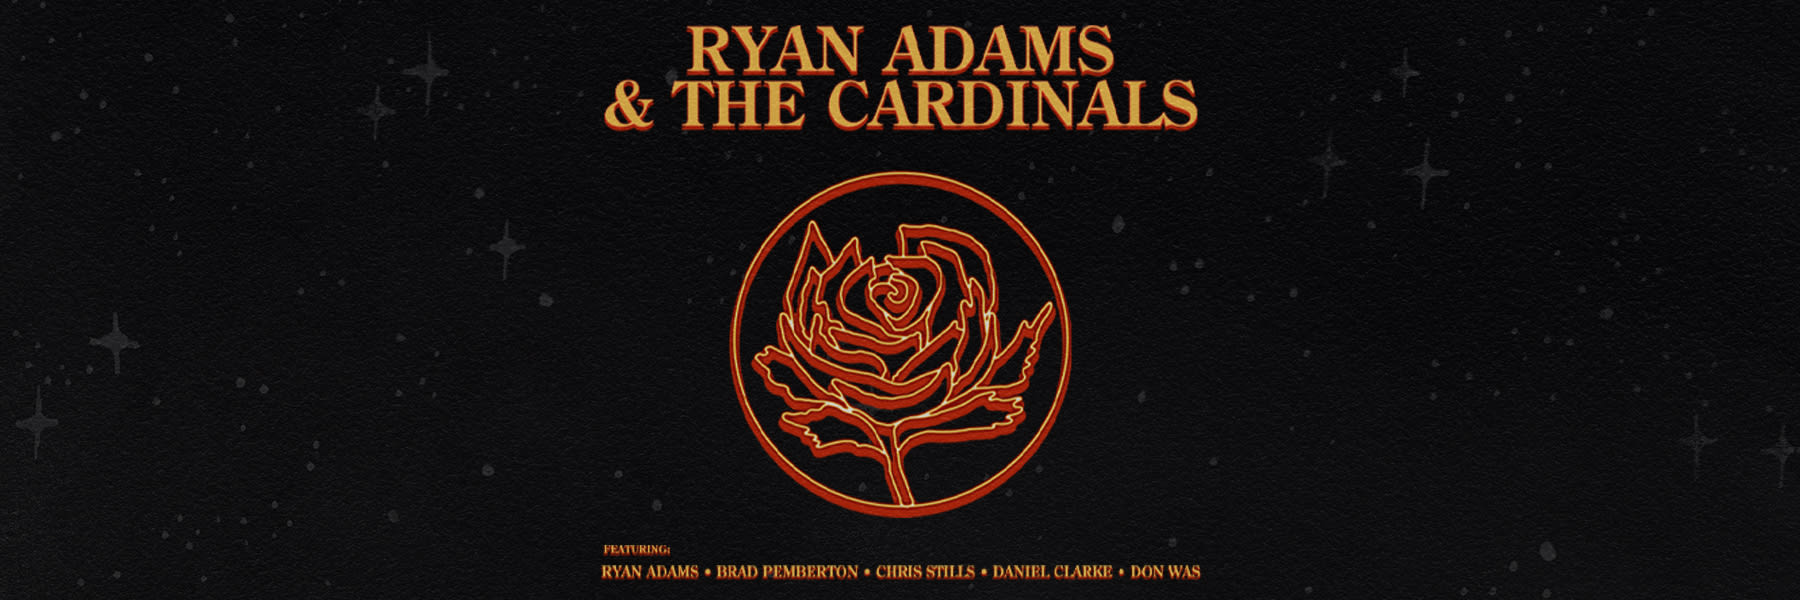 Ryan Adams & The Cardinals Official Box Office Saenger Theatre